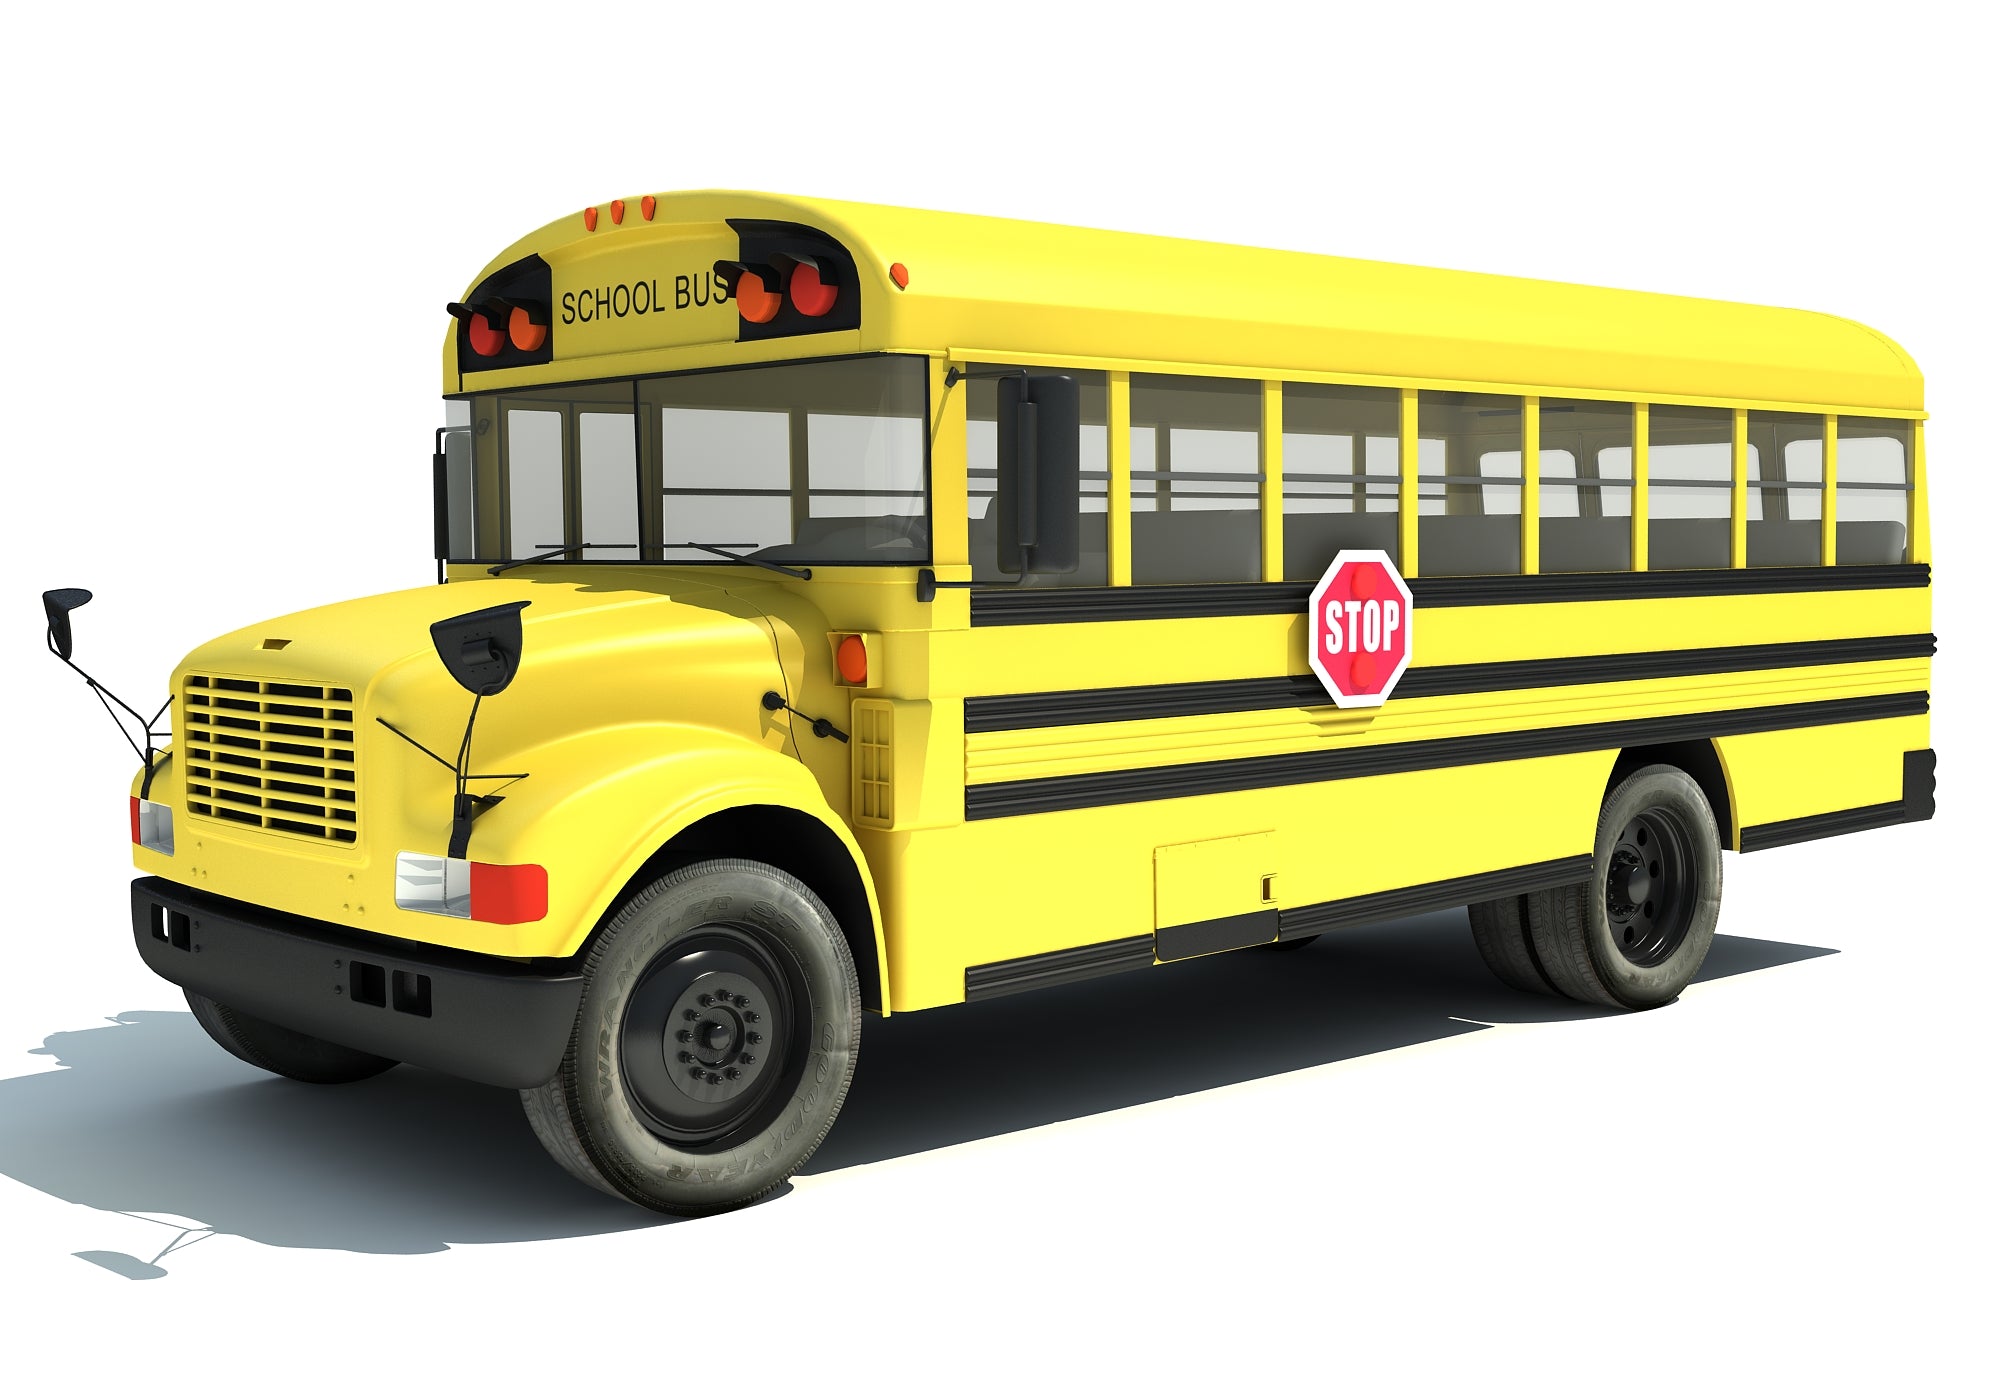 129,220 School Bus Images, Stock Photos, 3D objects, & Vectors